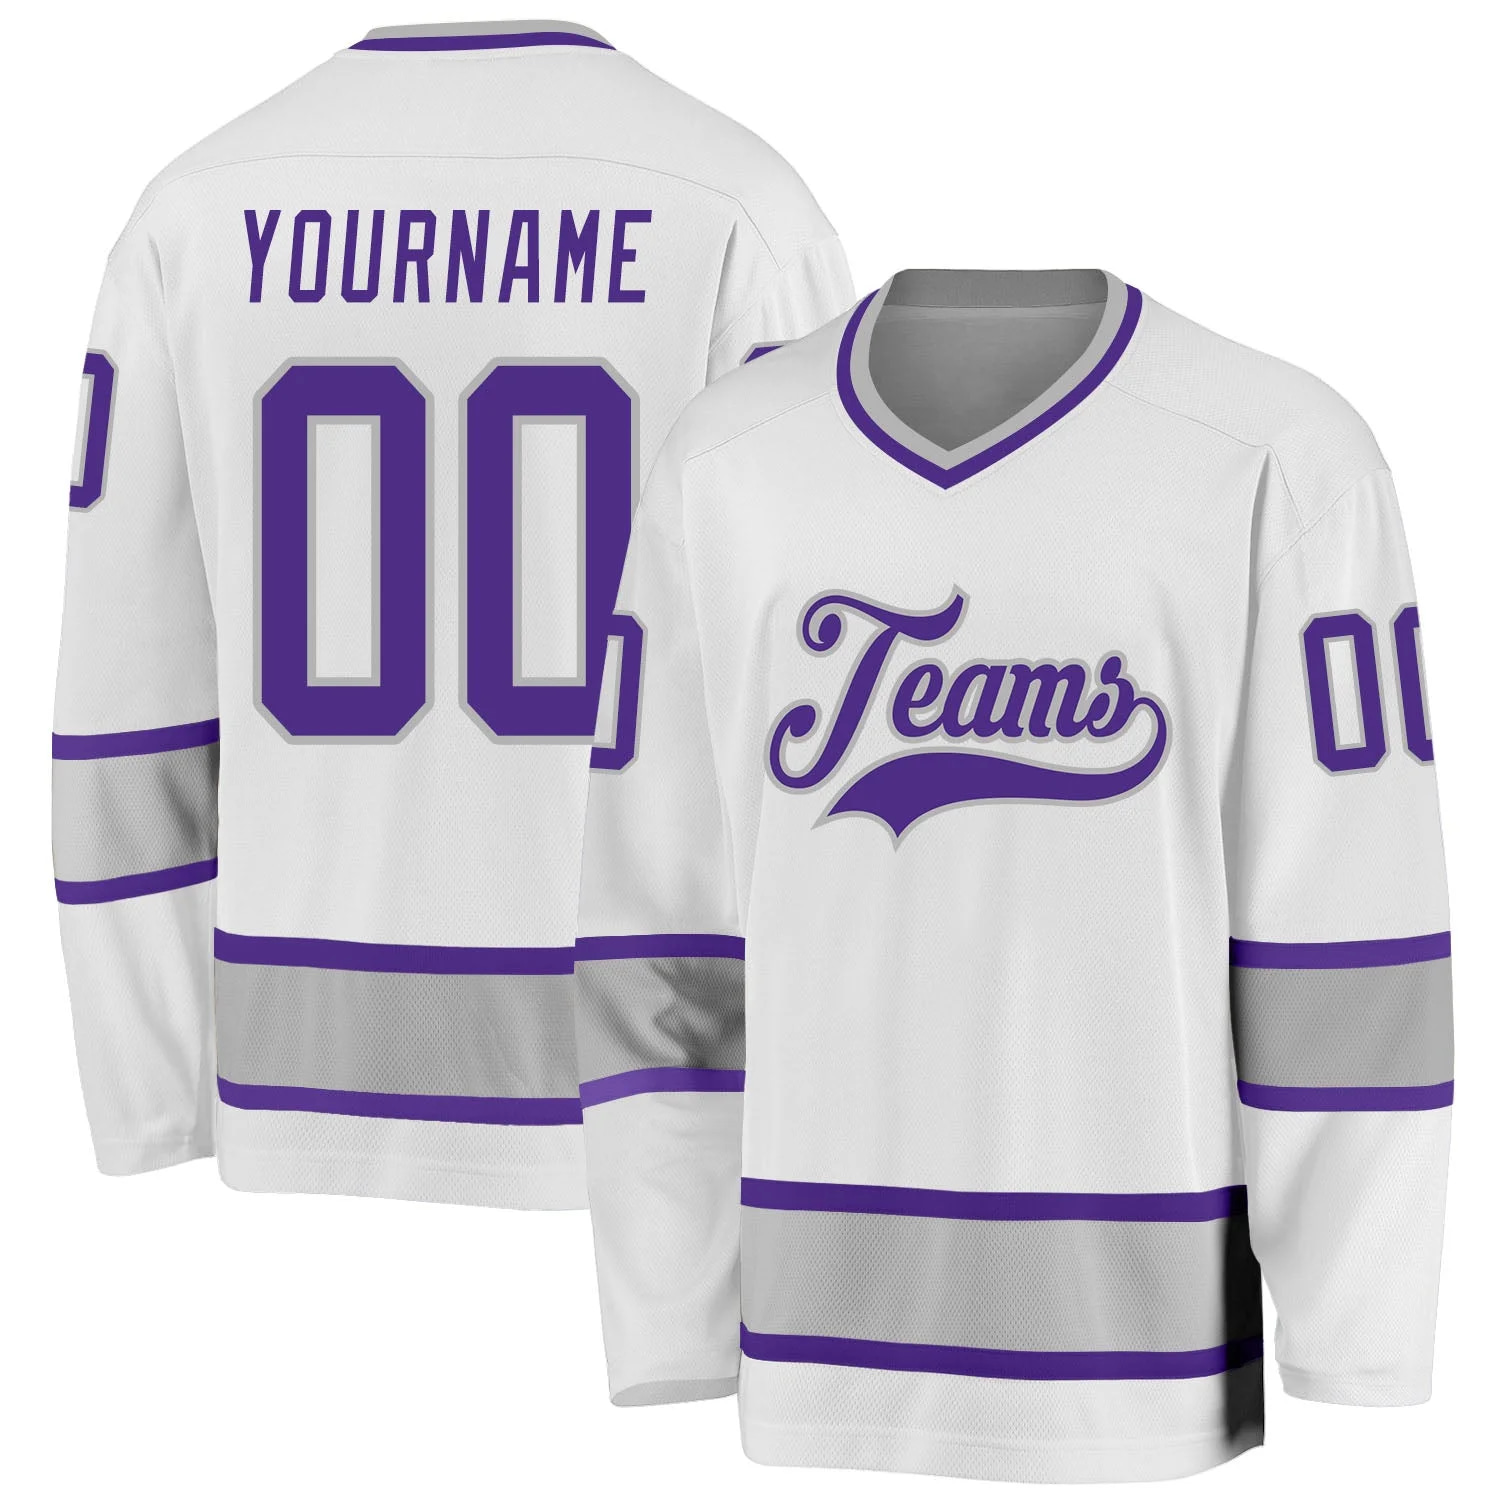 Stitched And Print White Purple-gray Hockey Jersey Custom